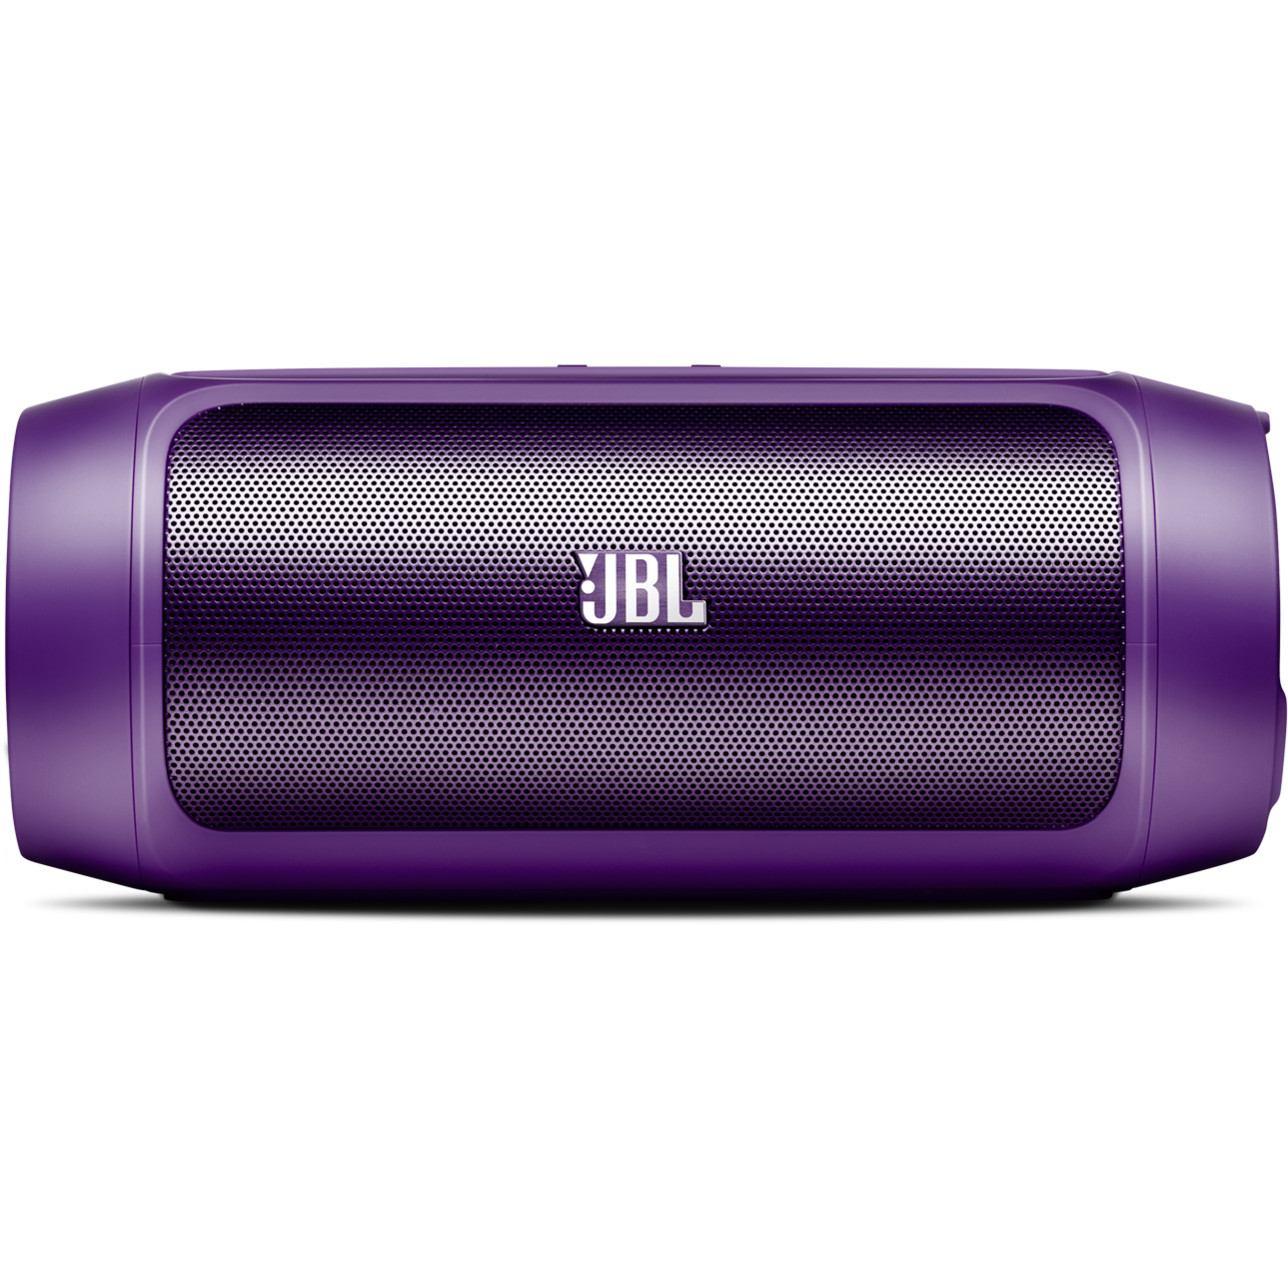  Boxa portabila JBL Charge 2, Violet 